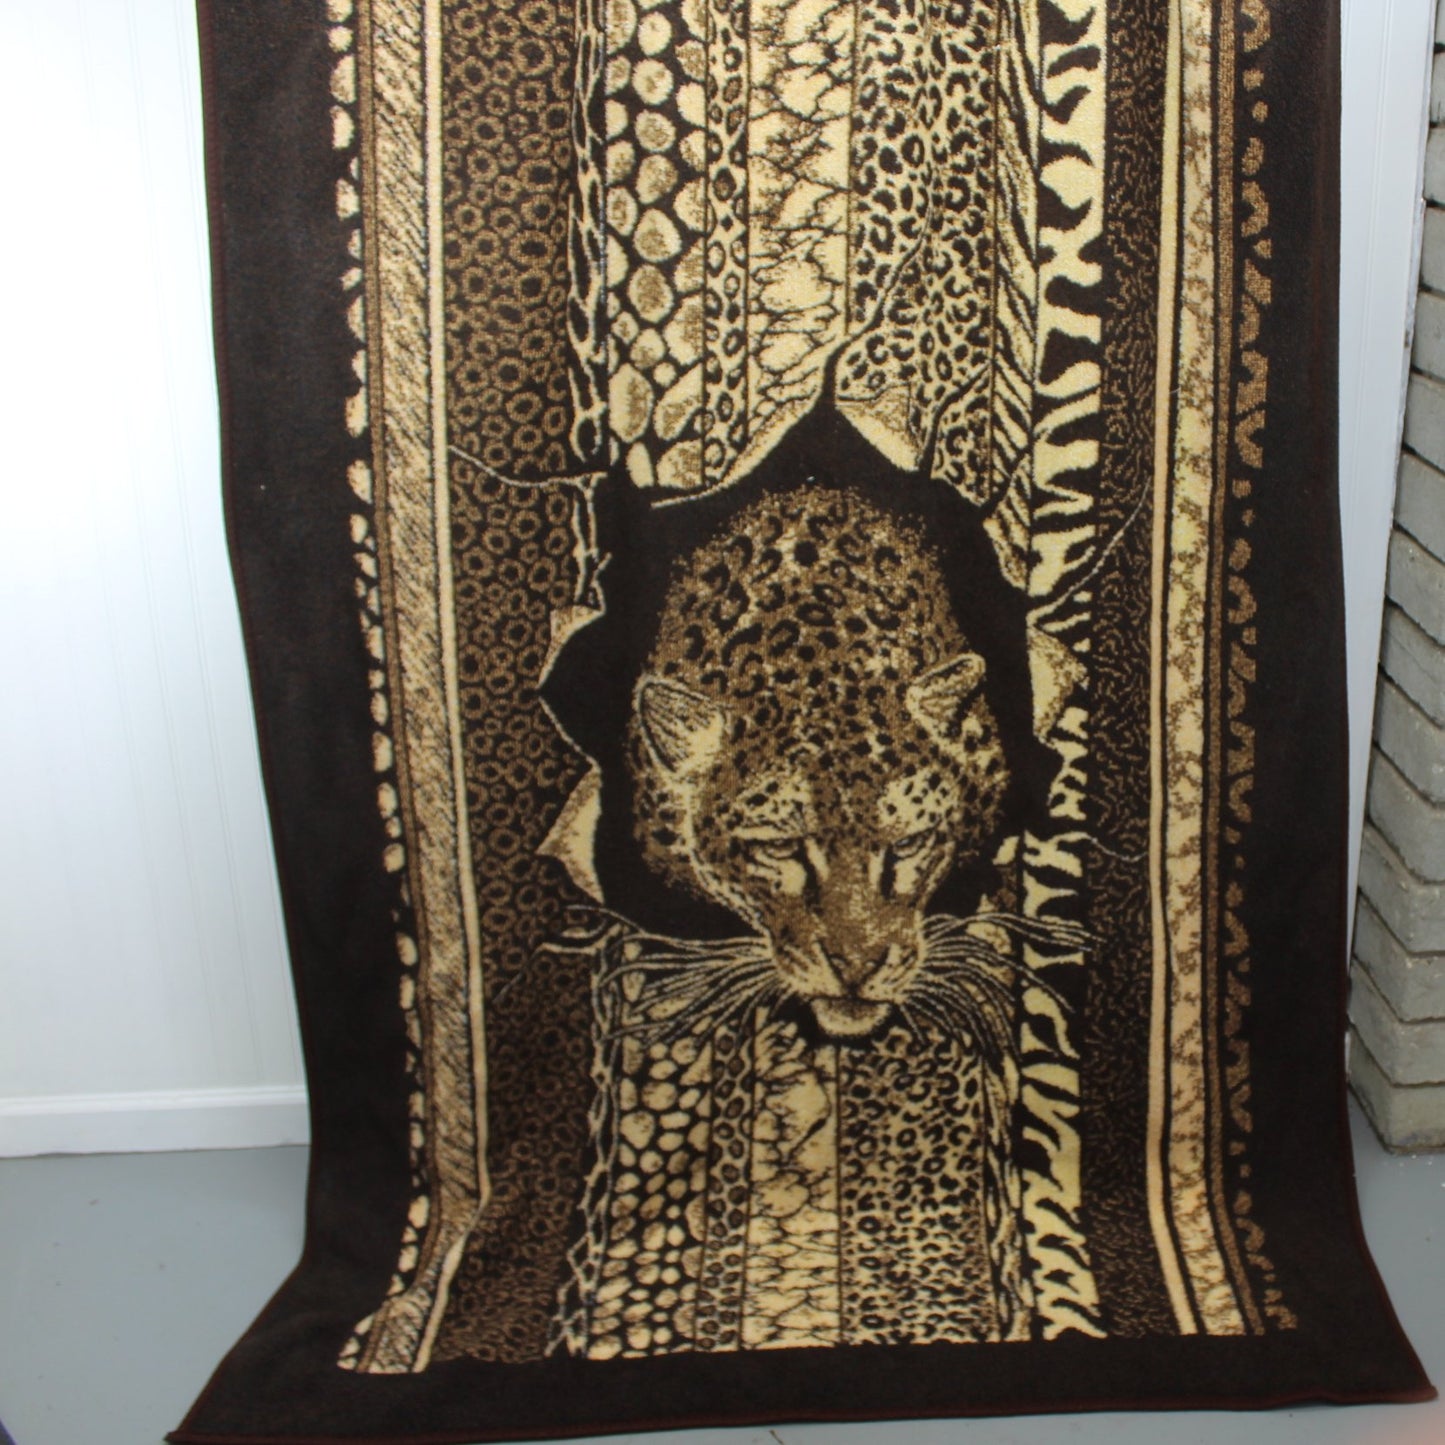 San Marcos Hometex Acrylic Cotton Blanket Leopard African Symbols stunning design